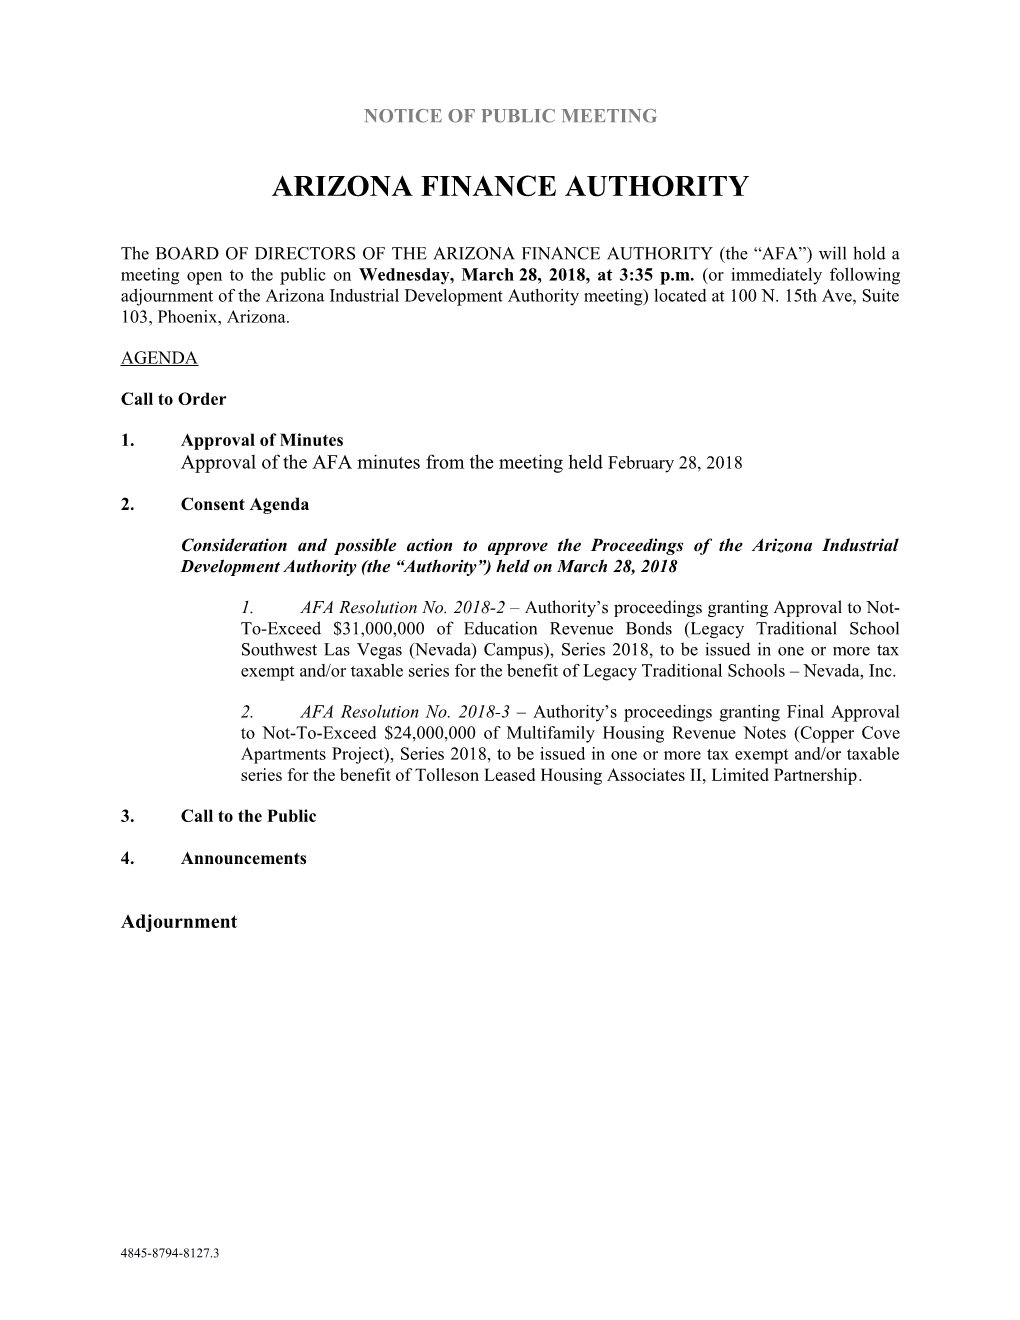 Arizona Finance Authority